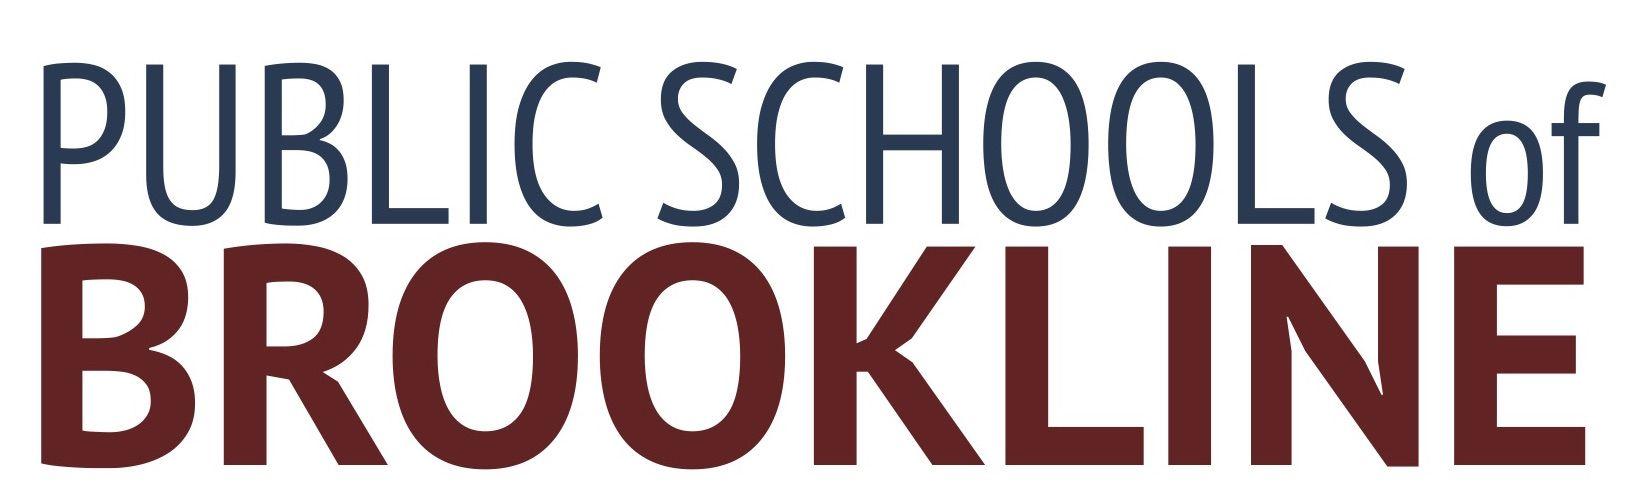 Brookline Logo - Newsletter Content / March 2018 Newsletter